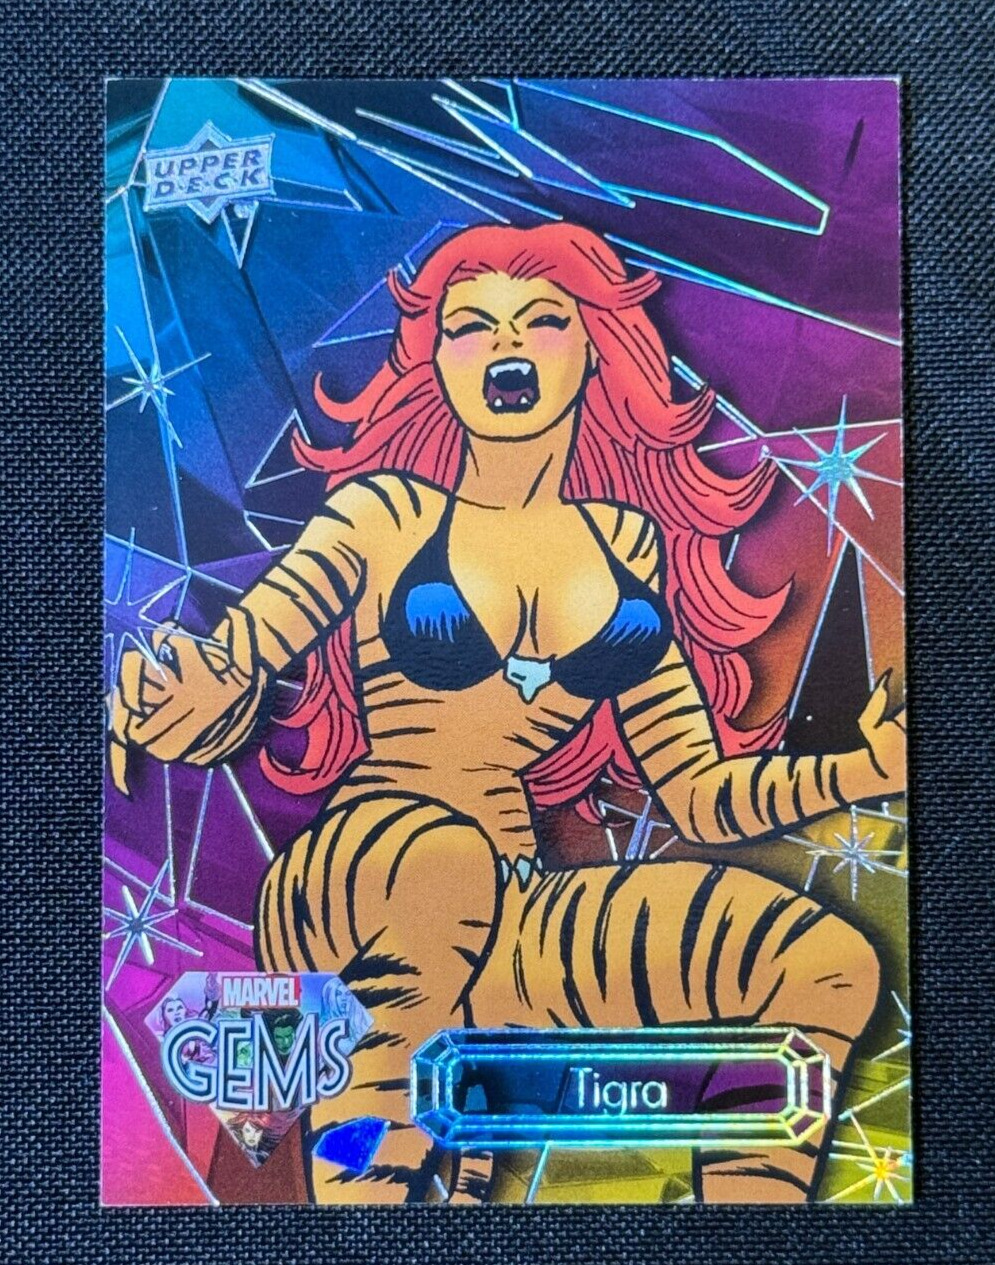 Tigra 2016 Upper Deck Marvel Gems /225 Card #5